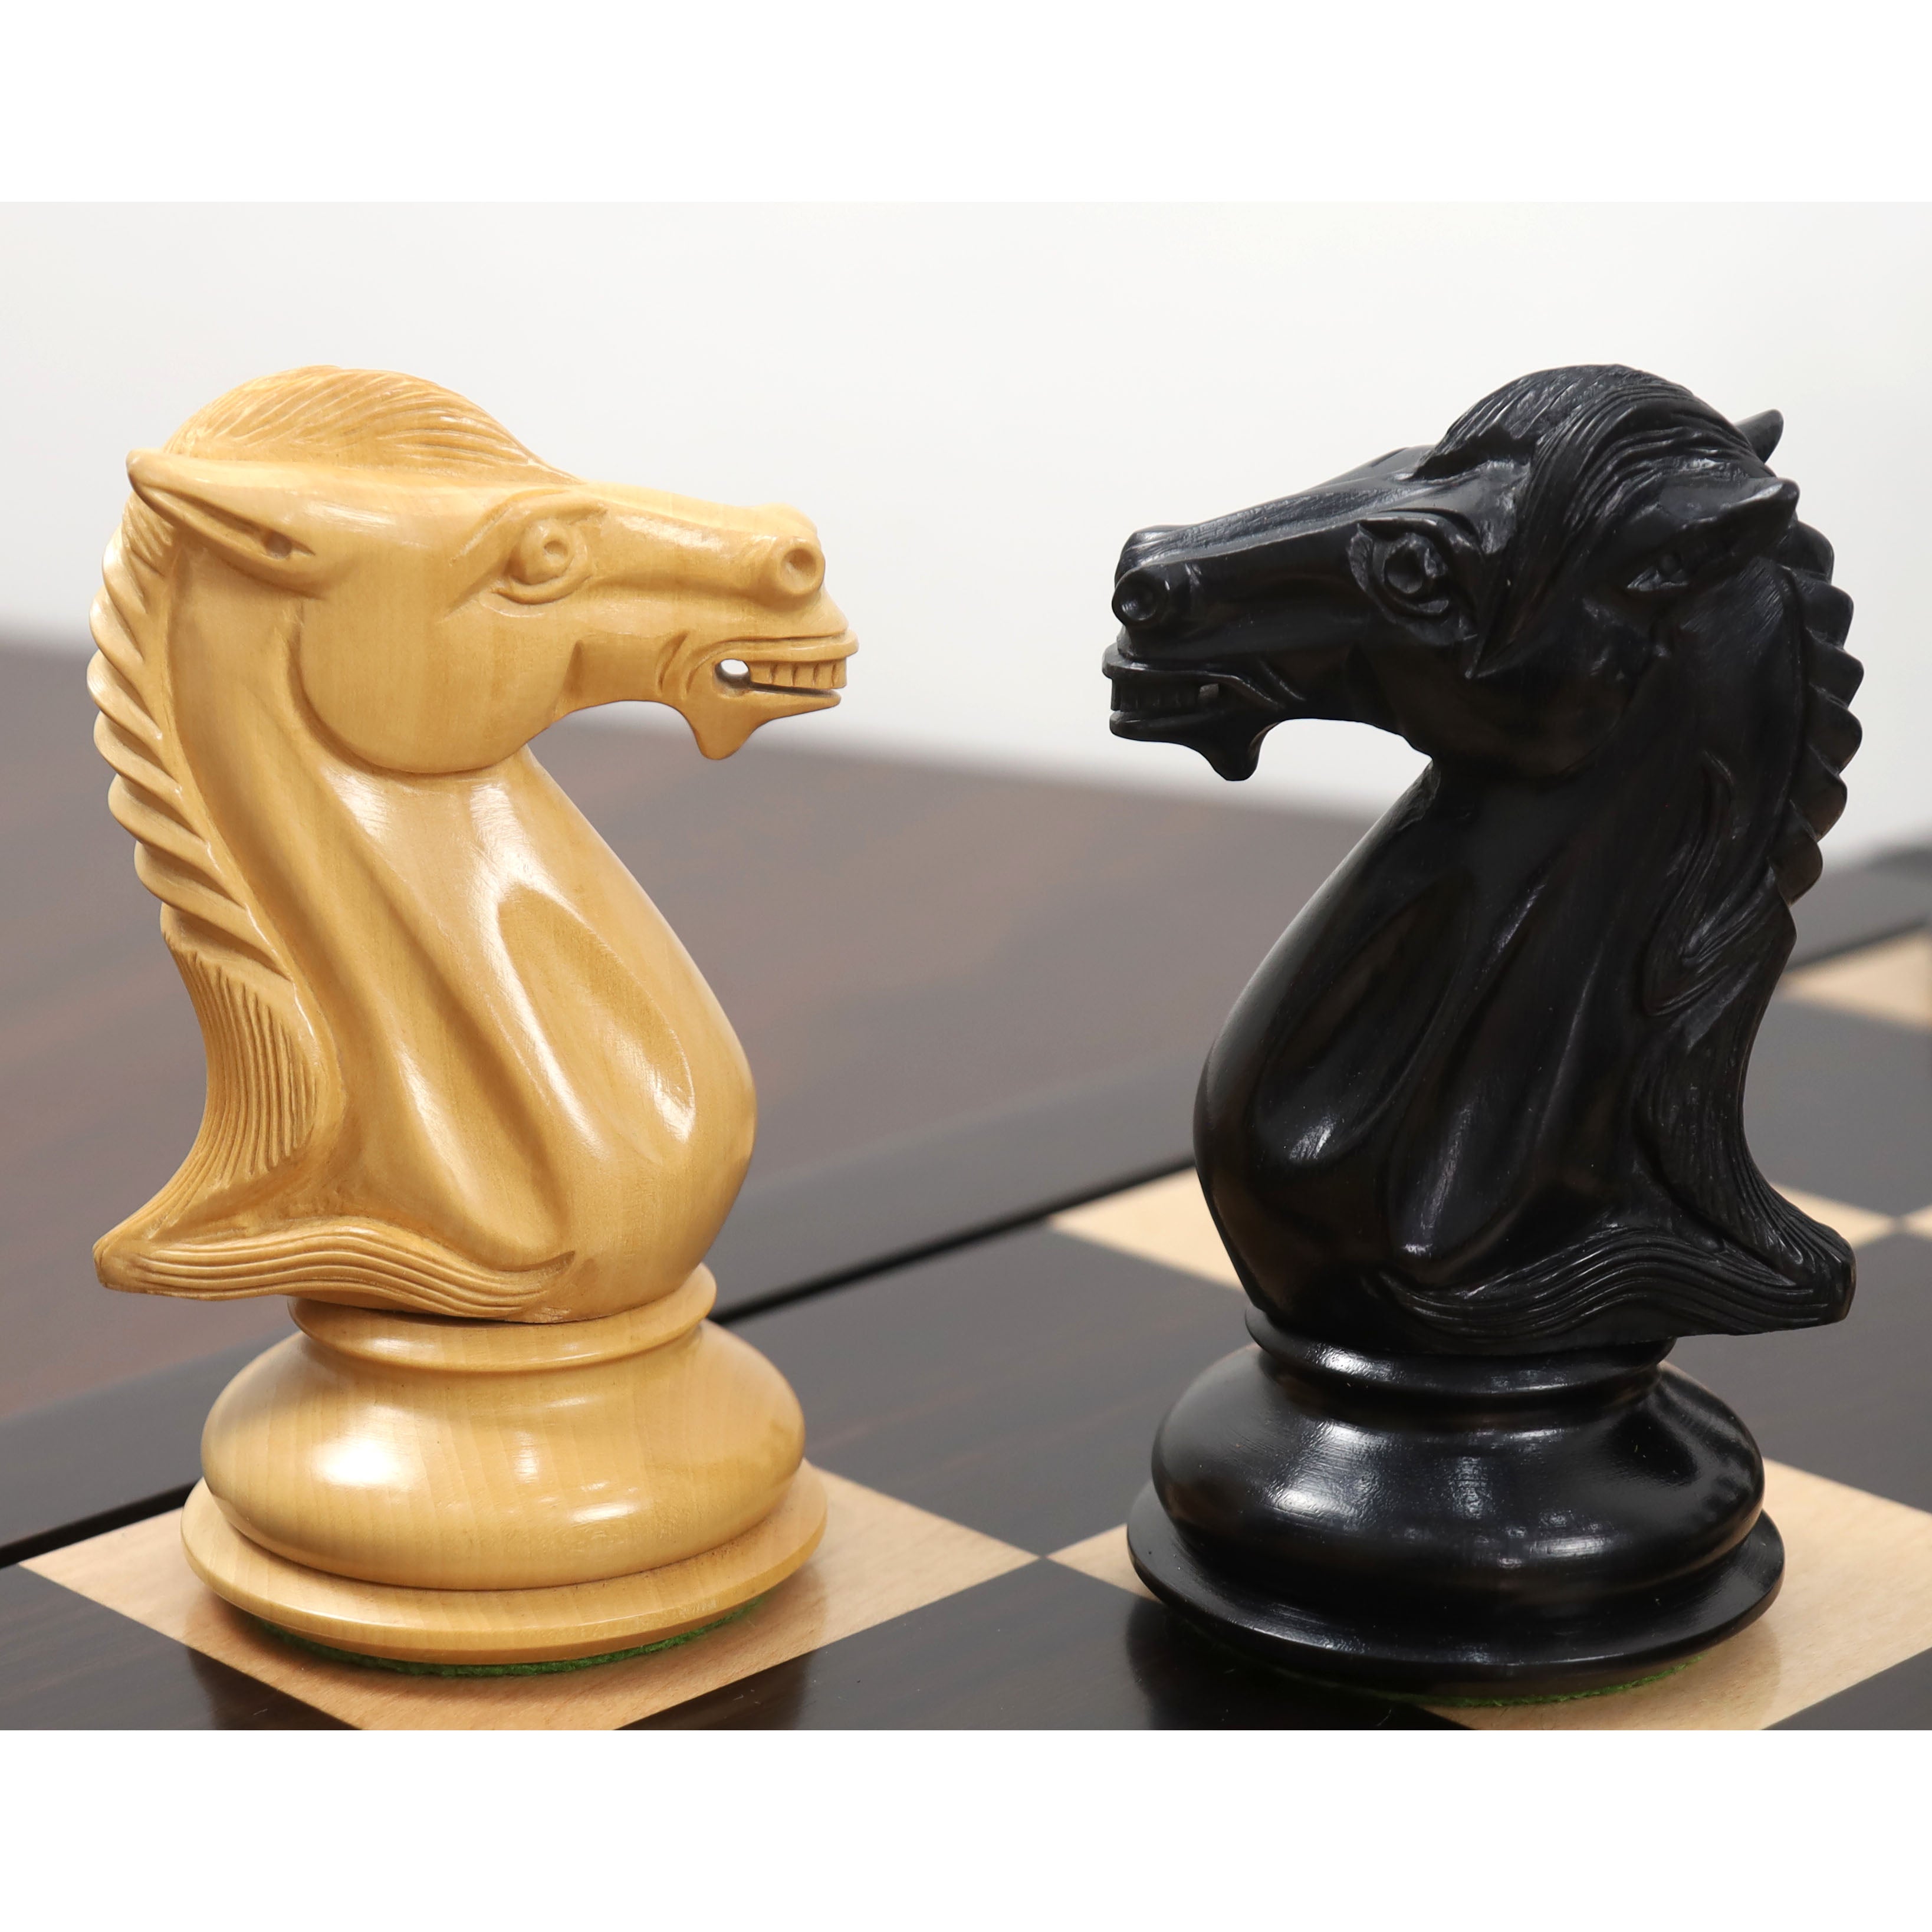 6.1" Mammoth Luxury Staunton Chess Pieces Only Set - Ebony Wood - Triple Weight